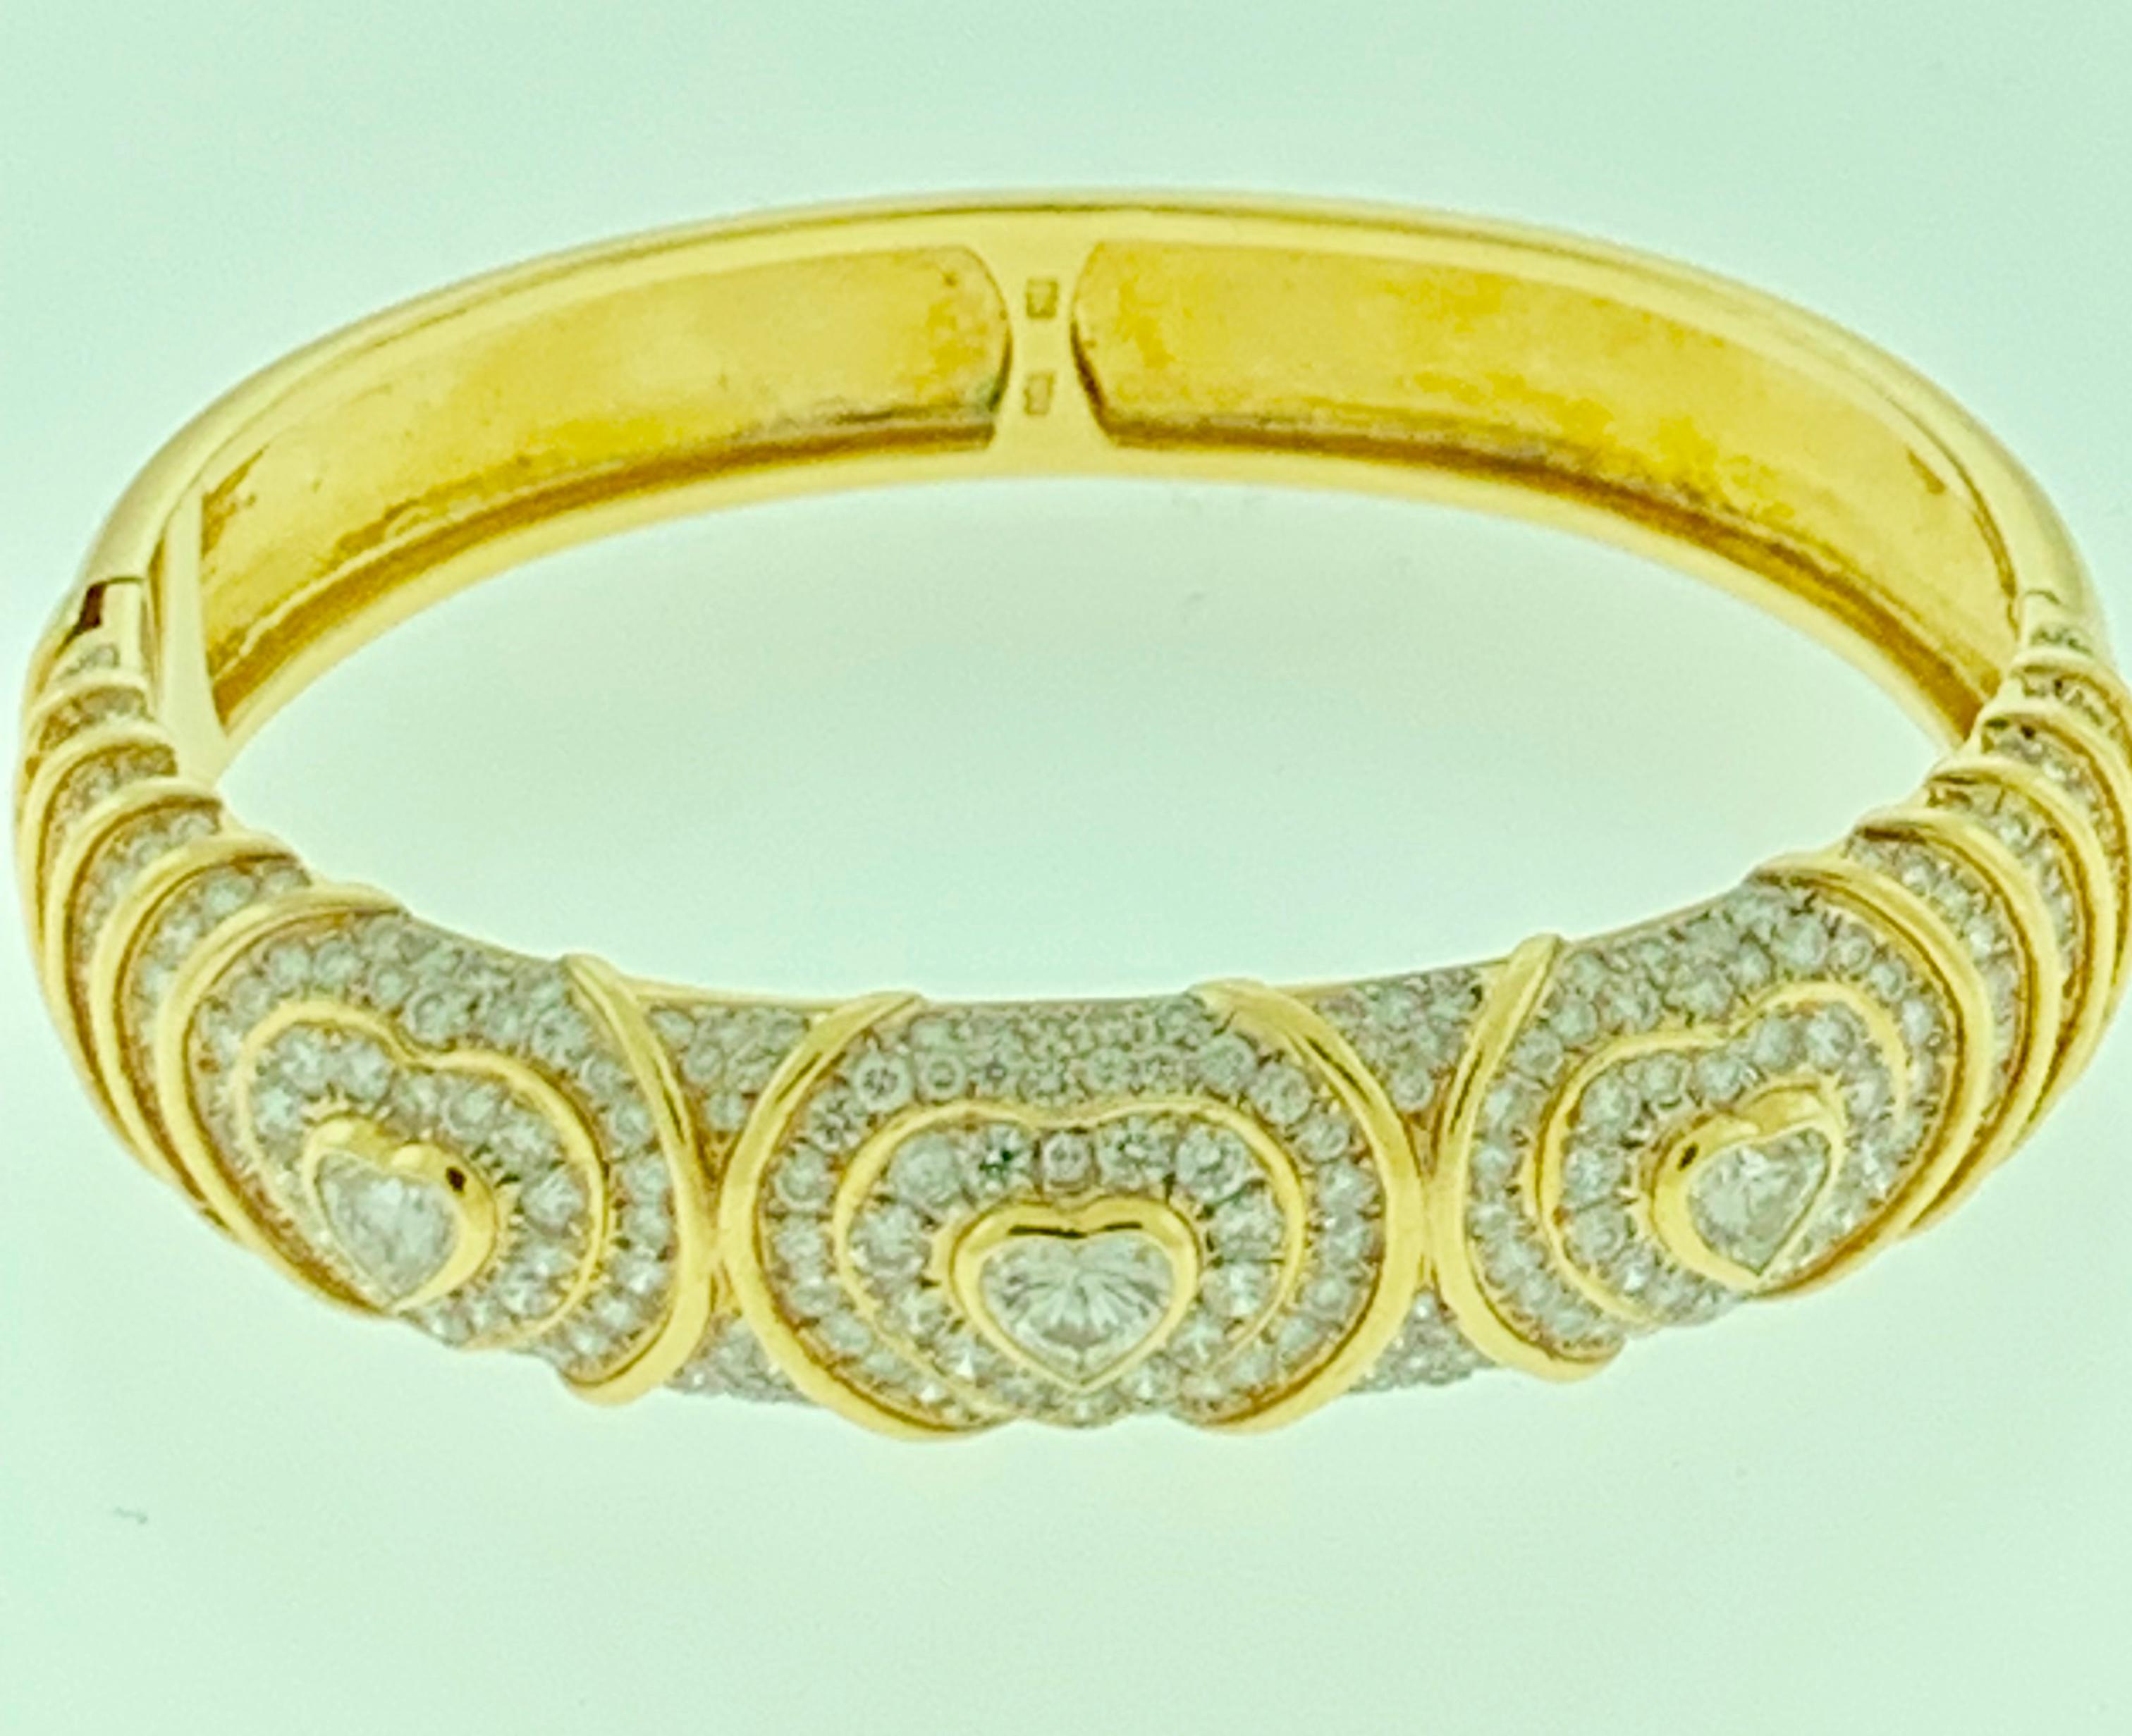 10 Carat Diamond Heart Shape Bangle /Bracelet in 18 Karat Yellow Gold 48 Grams 1